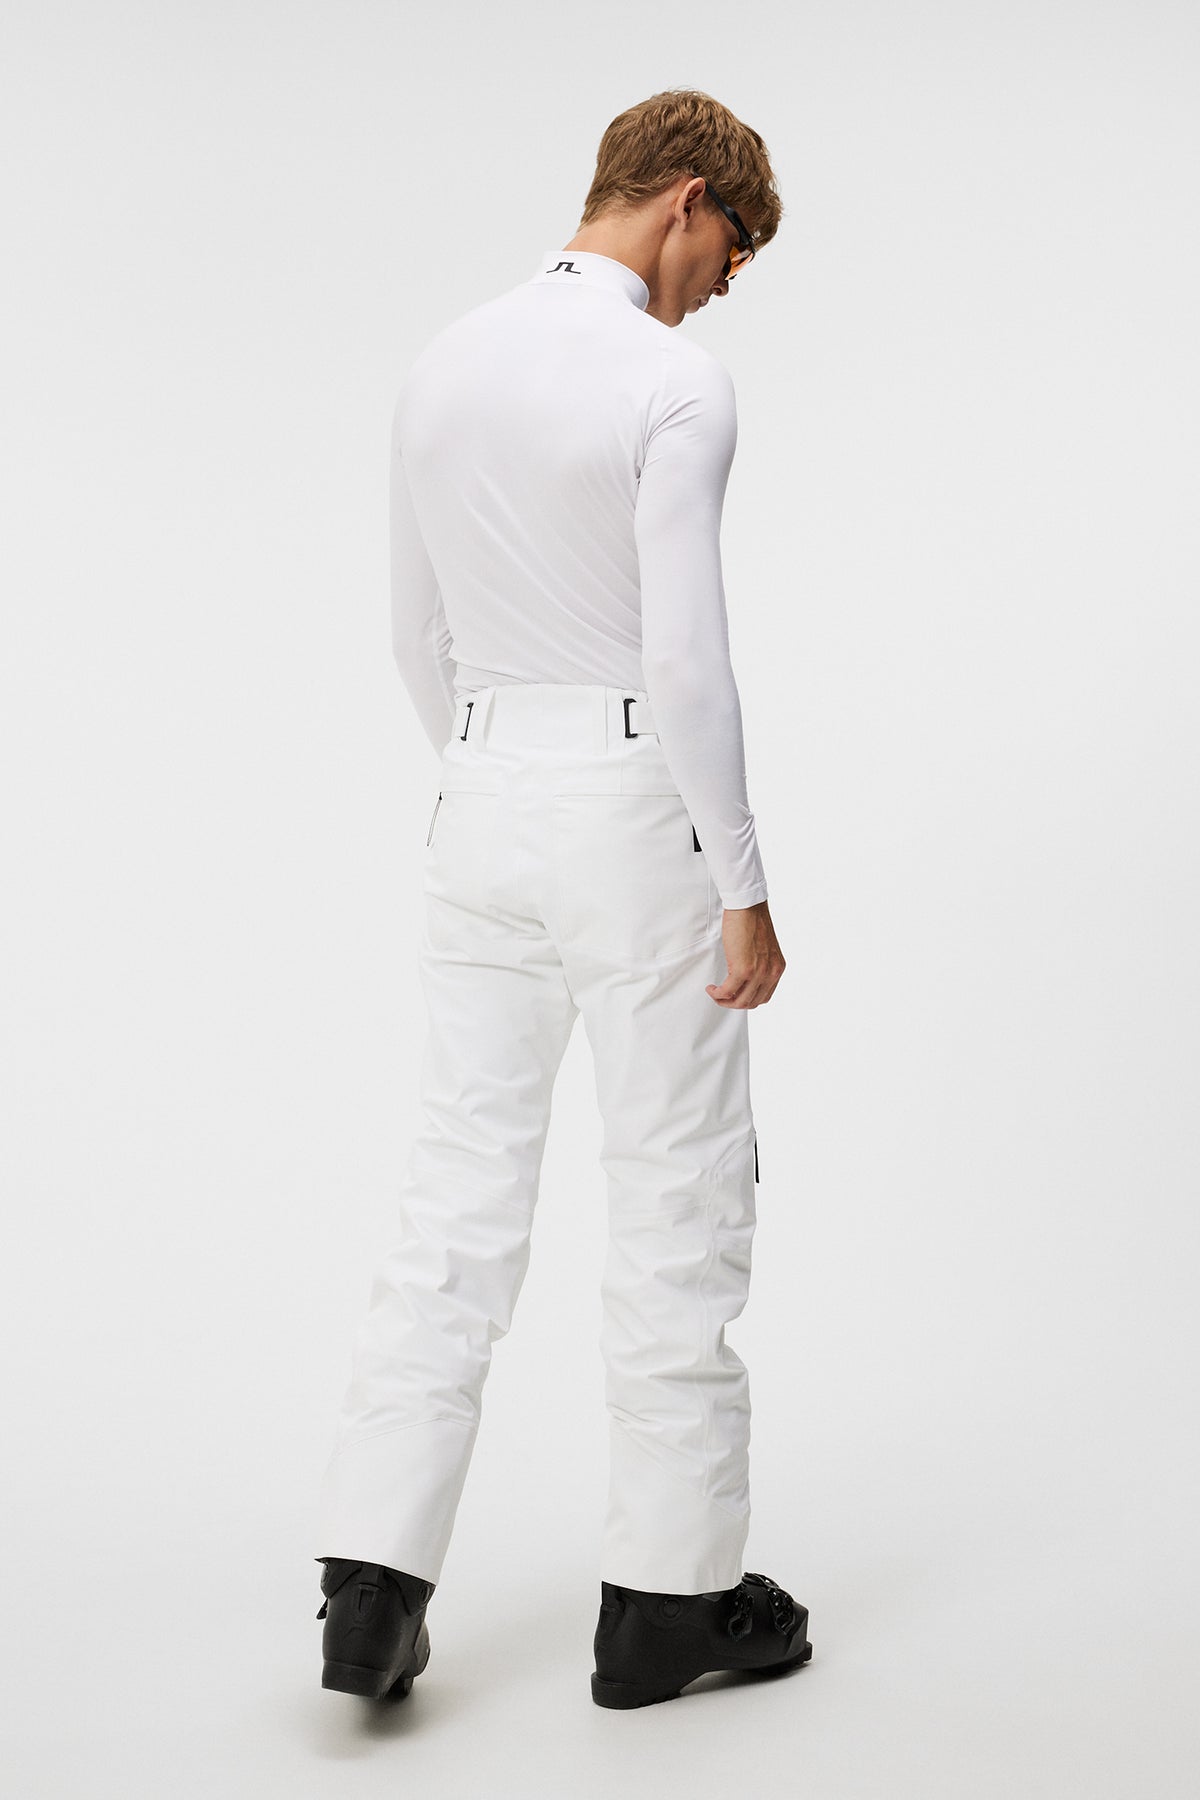 Omnia Pants / White